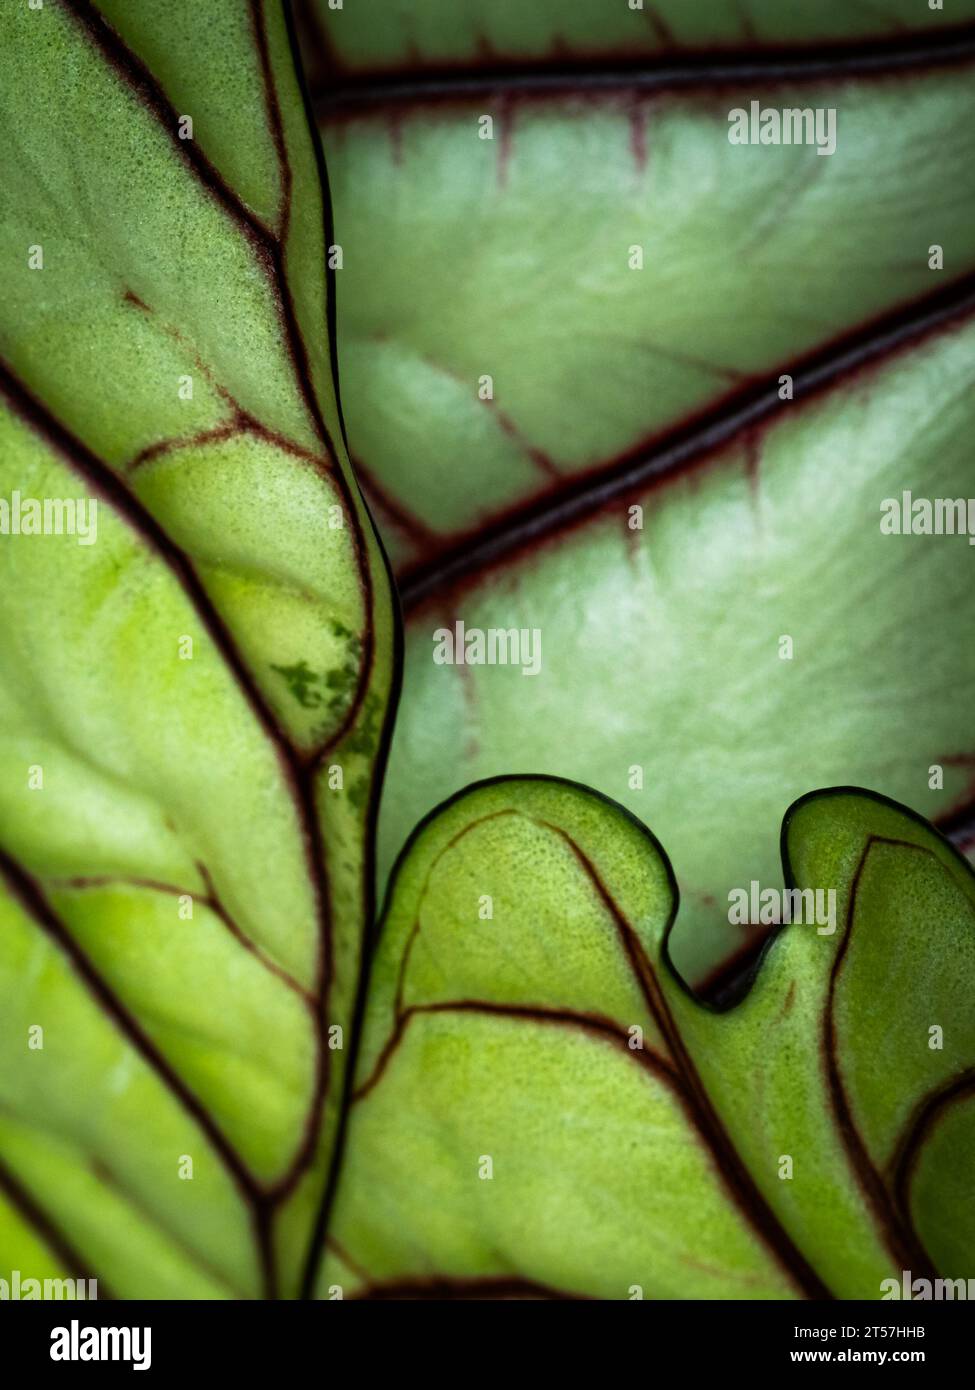 leaf edge of Alocasia Baginda plant, abstract macro Stock Photo